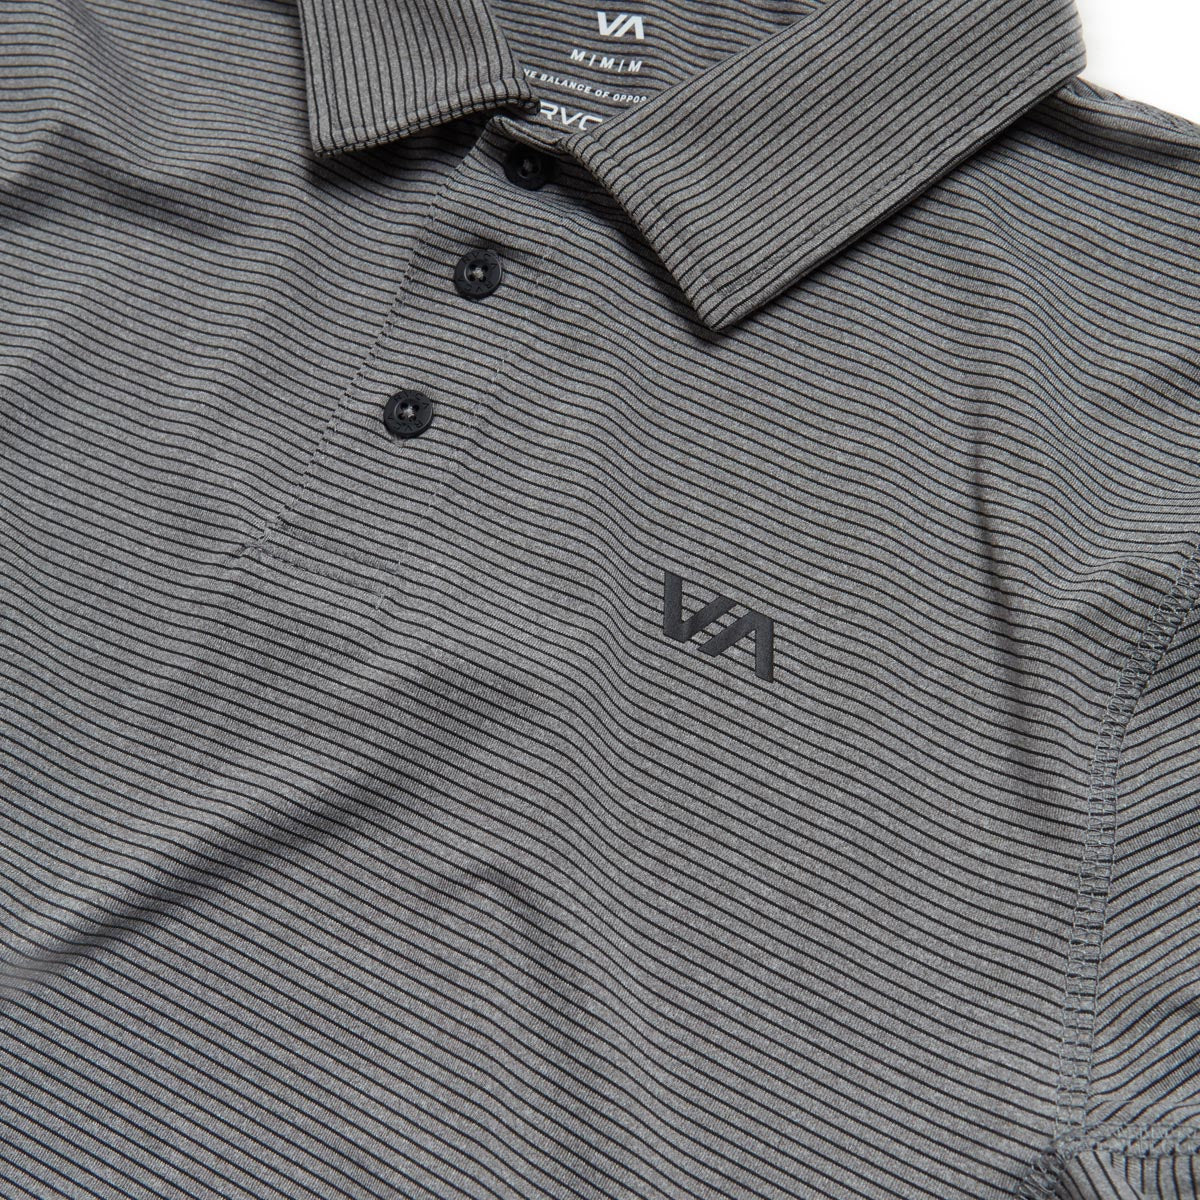 RVCA Sport Vent Polo Shirt - Heather Grey Stripe image 3